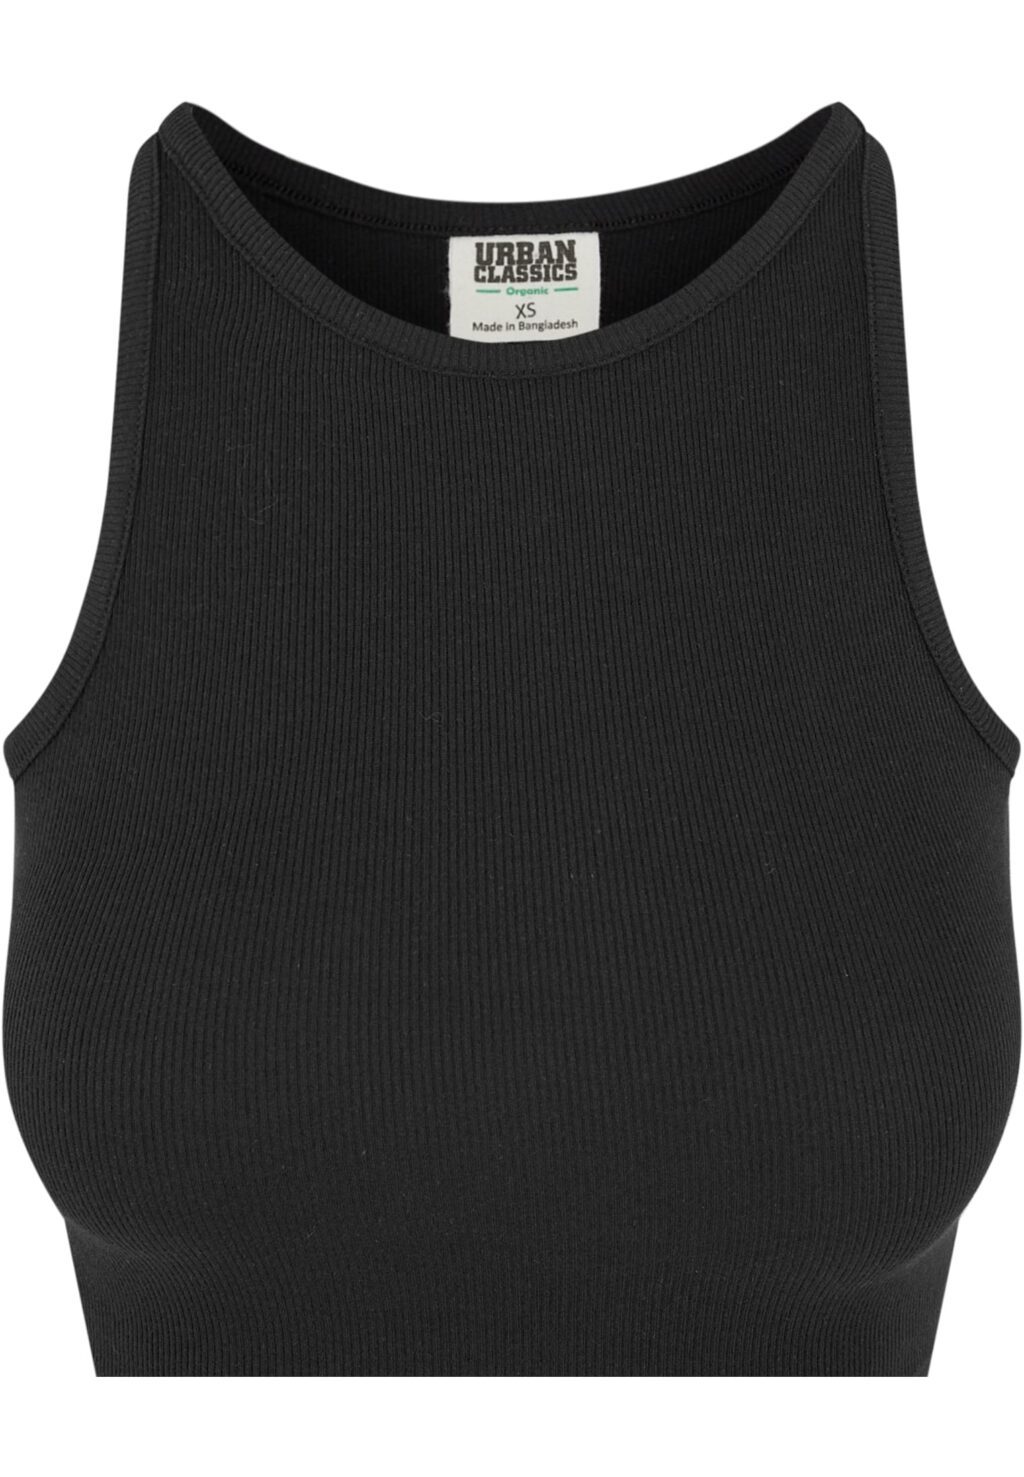 Urban Classics Ladies Organic Cropped Rib Top 2-Pack black/black TB6185A